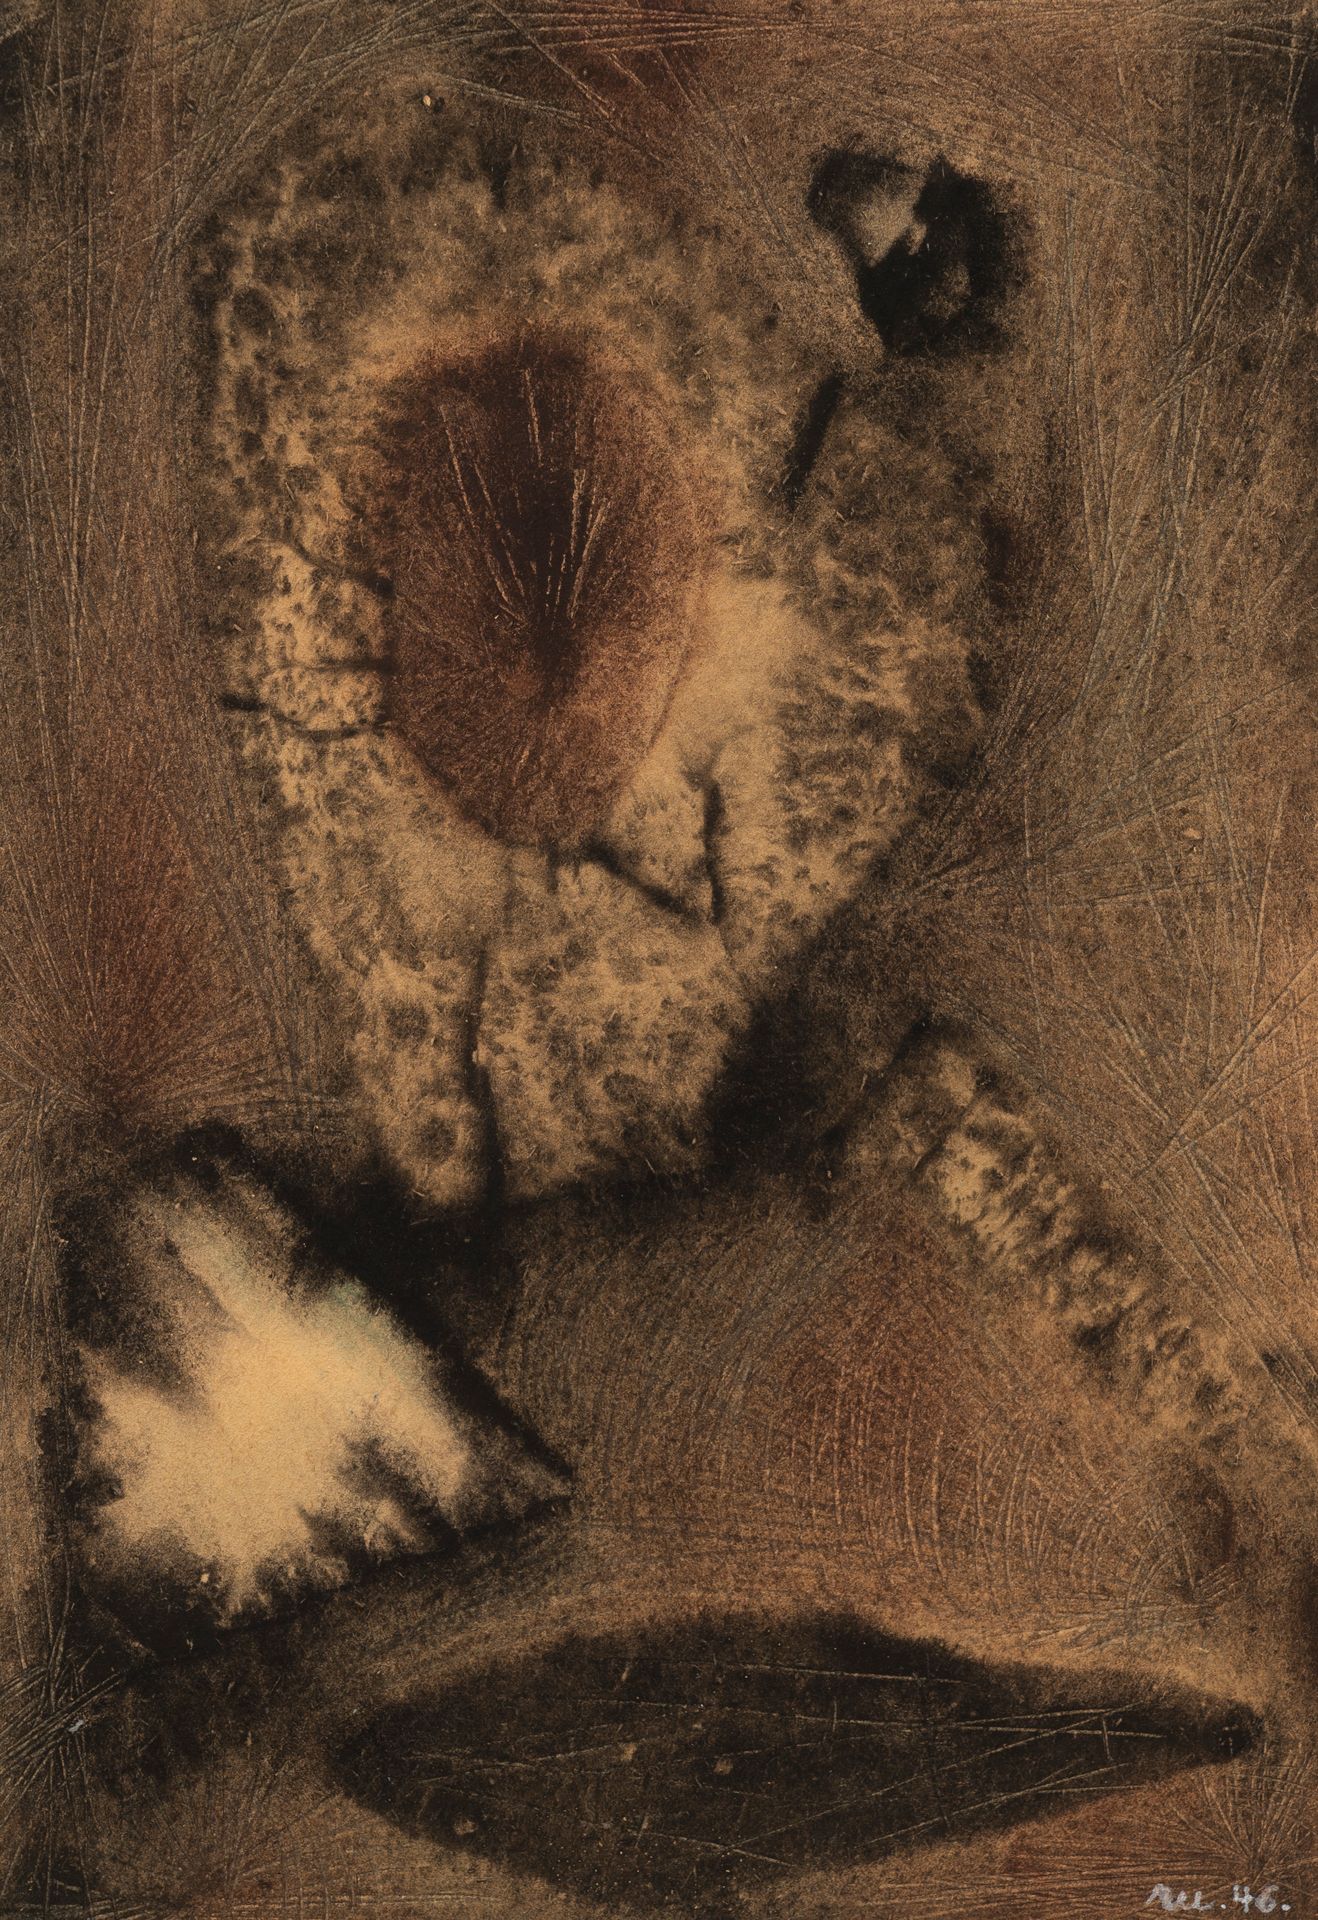 Null 拉乌尔-乌巴克(1910-1985)

化石

混合媒体，右下角有图案和日期 "46"。

27 x 18,5 cm